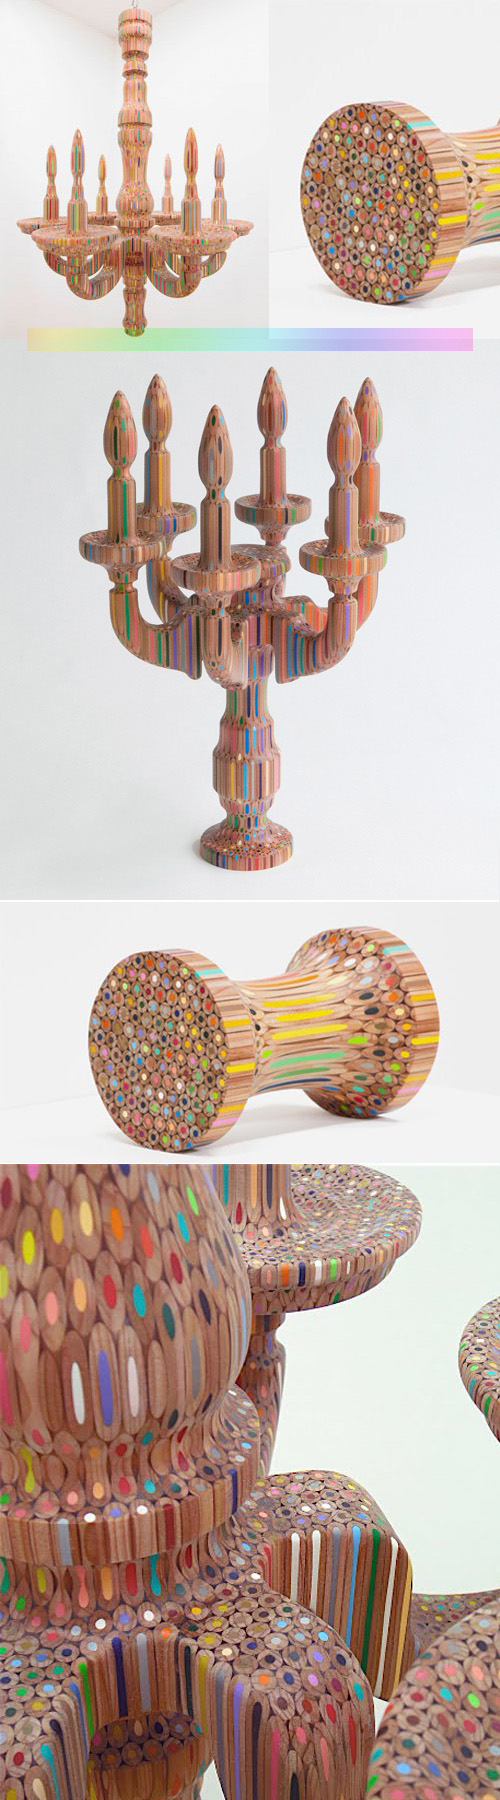 takafumi-yagi-colored-pencil-sculptures-1.jpg